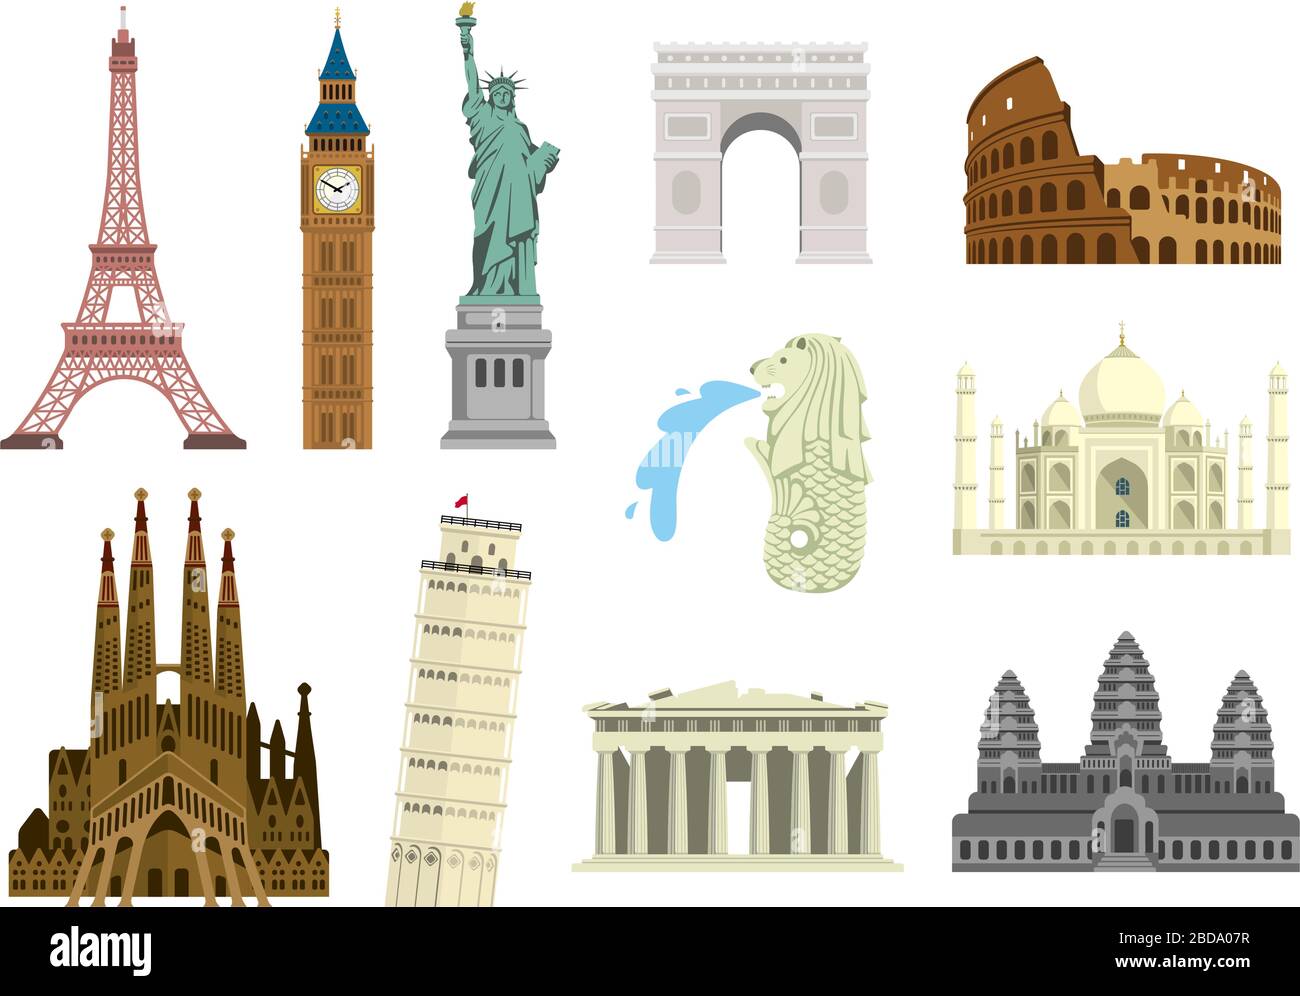 Weltberühmte Bauwerke Vektor-Illustration Set ( Welterbe ) / Freiheitsstatue, Eiffelturm, Sagrada Familia etc Stock Vektor